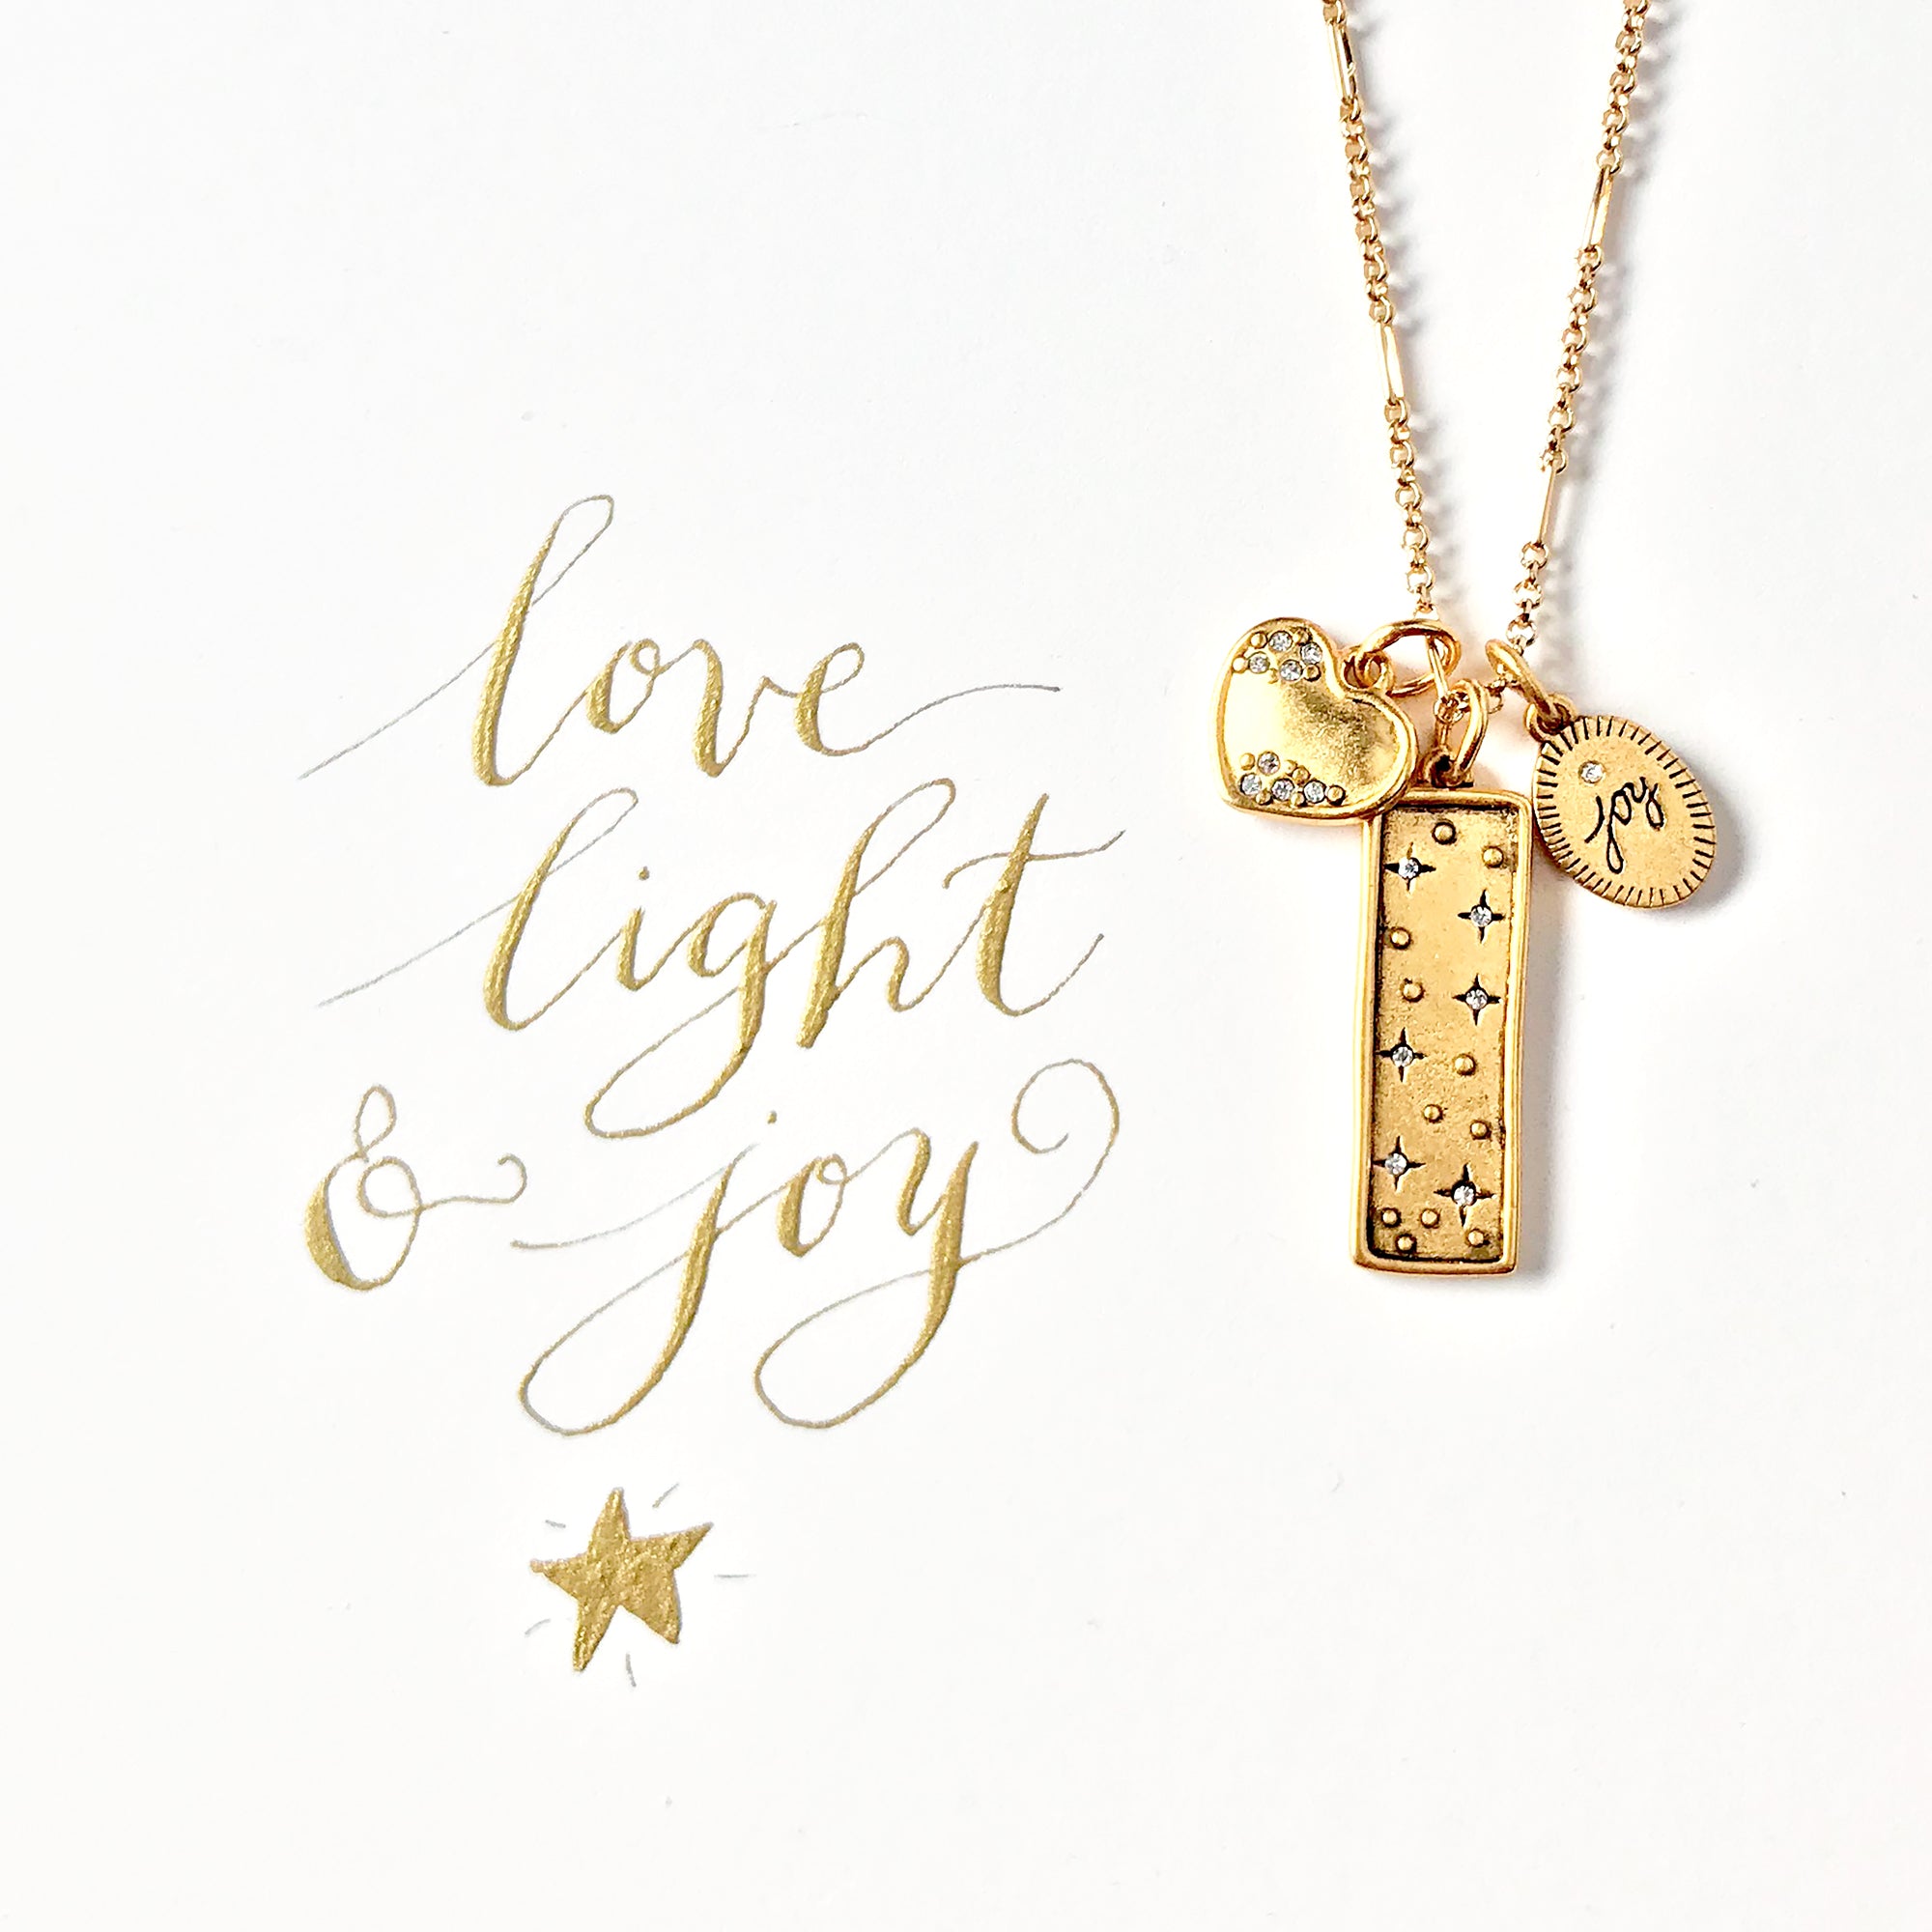 #SequinSayings - Love, Light & Joy!